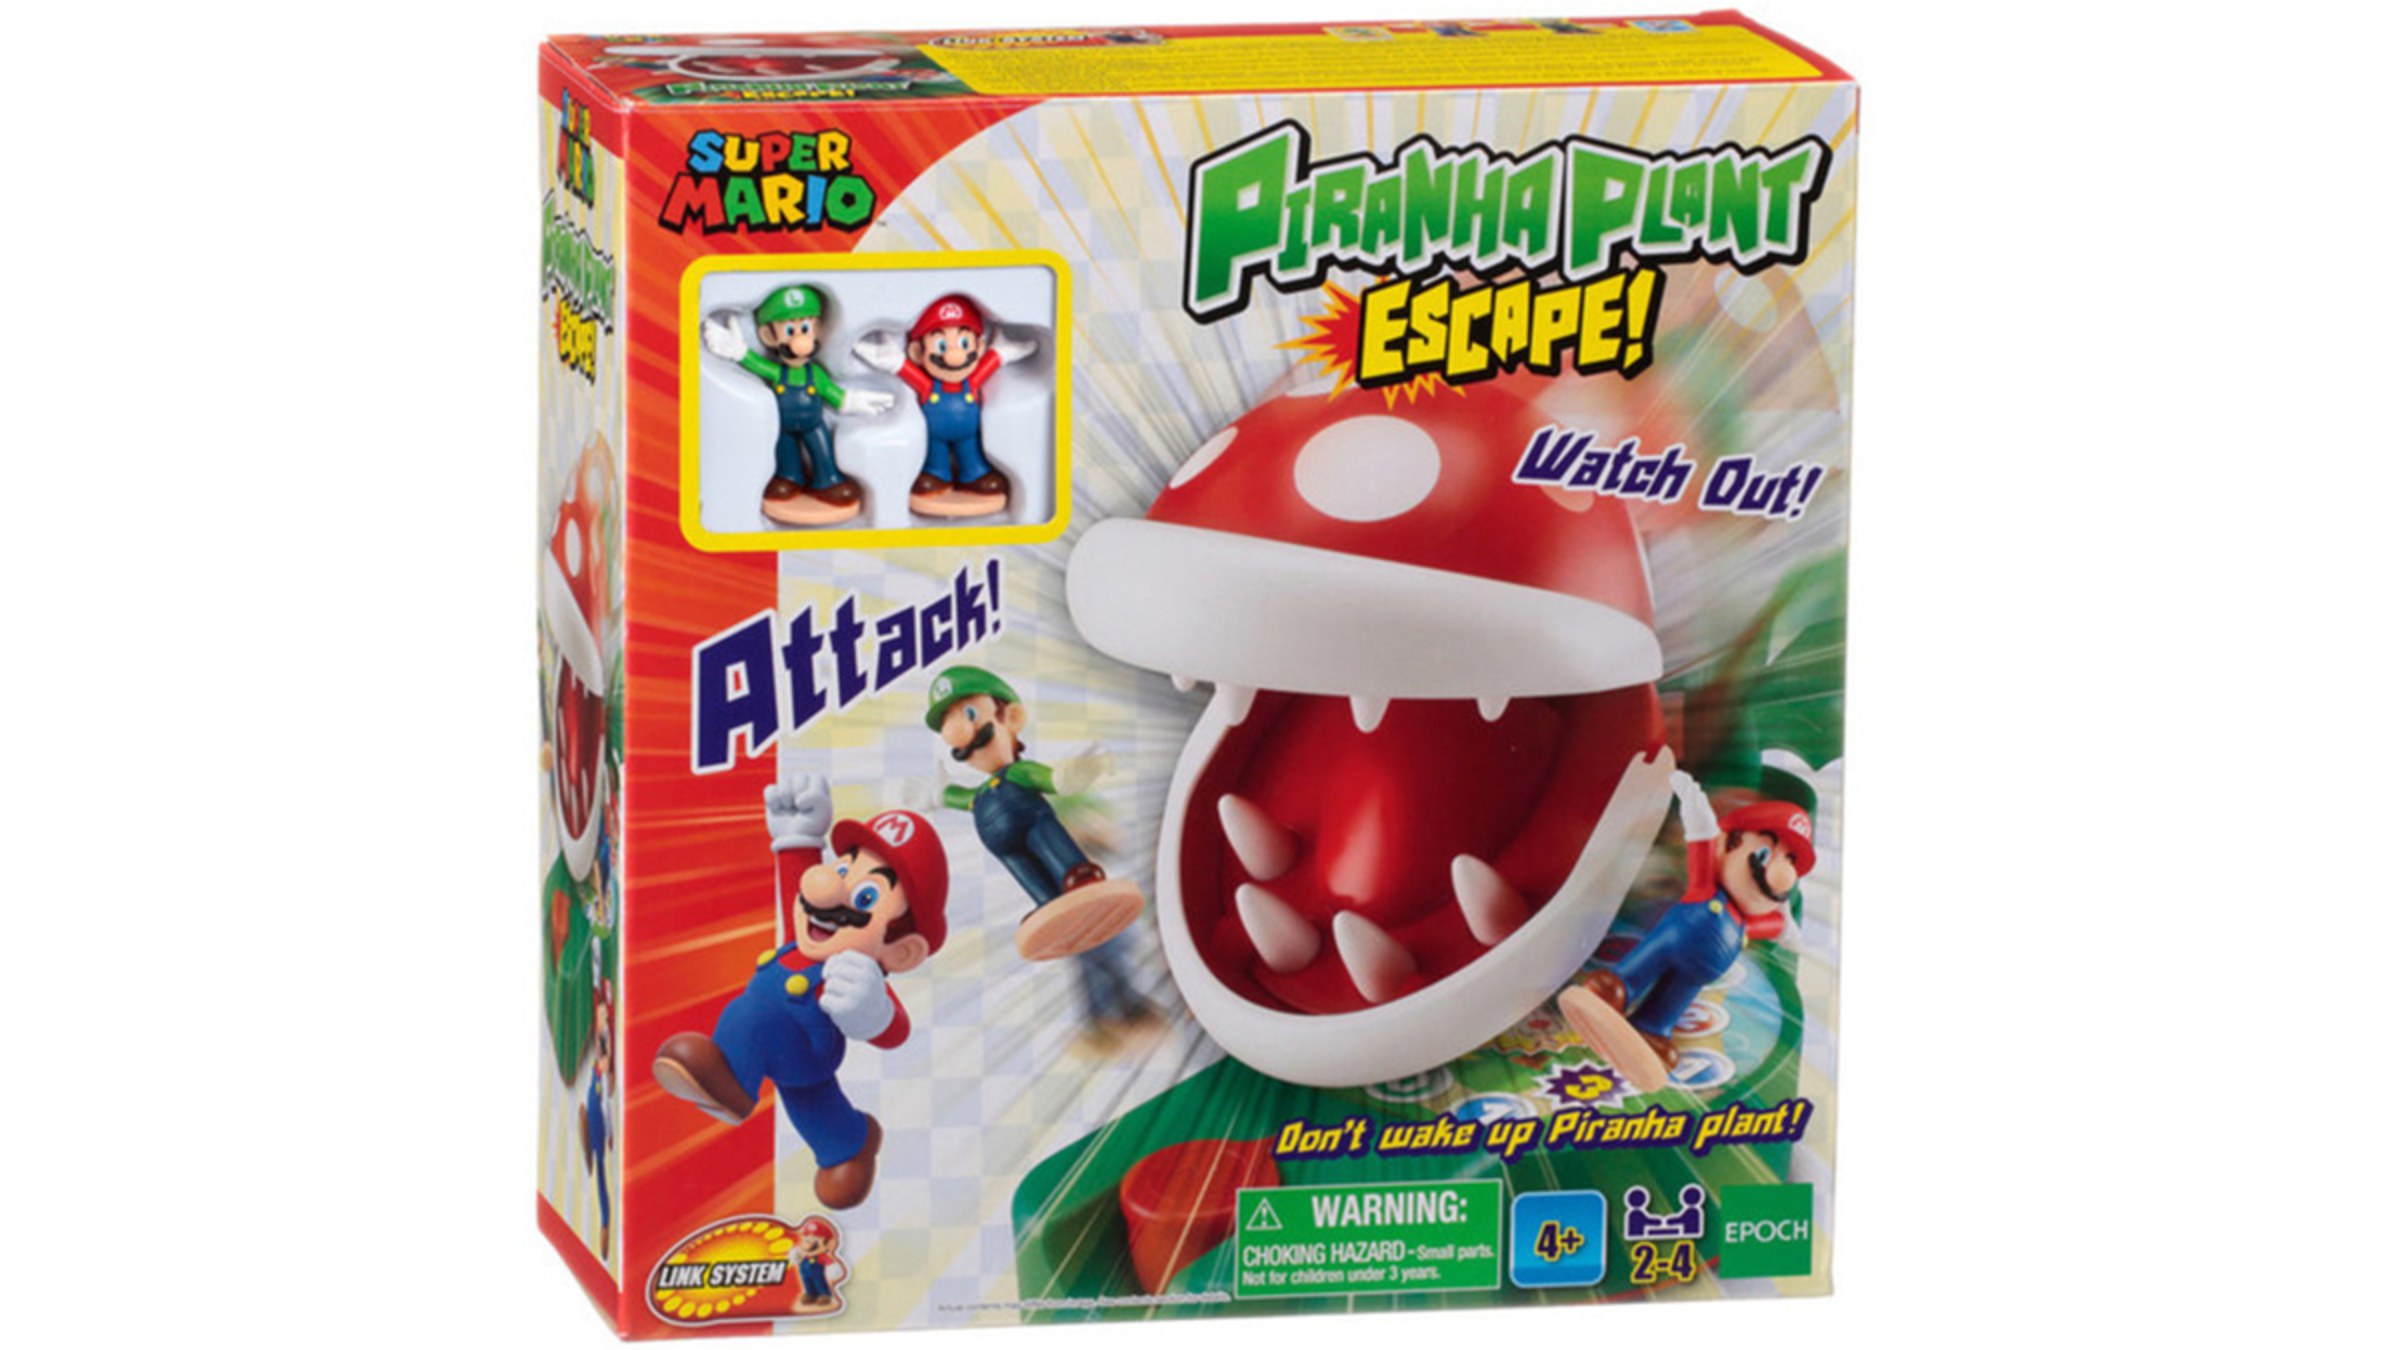 Leopard retfærdig ufuldstændig Super Mario™ Piranha Plant Escape! - Merchandise - Nintendo Official Site